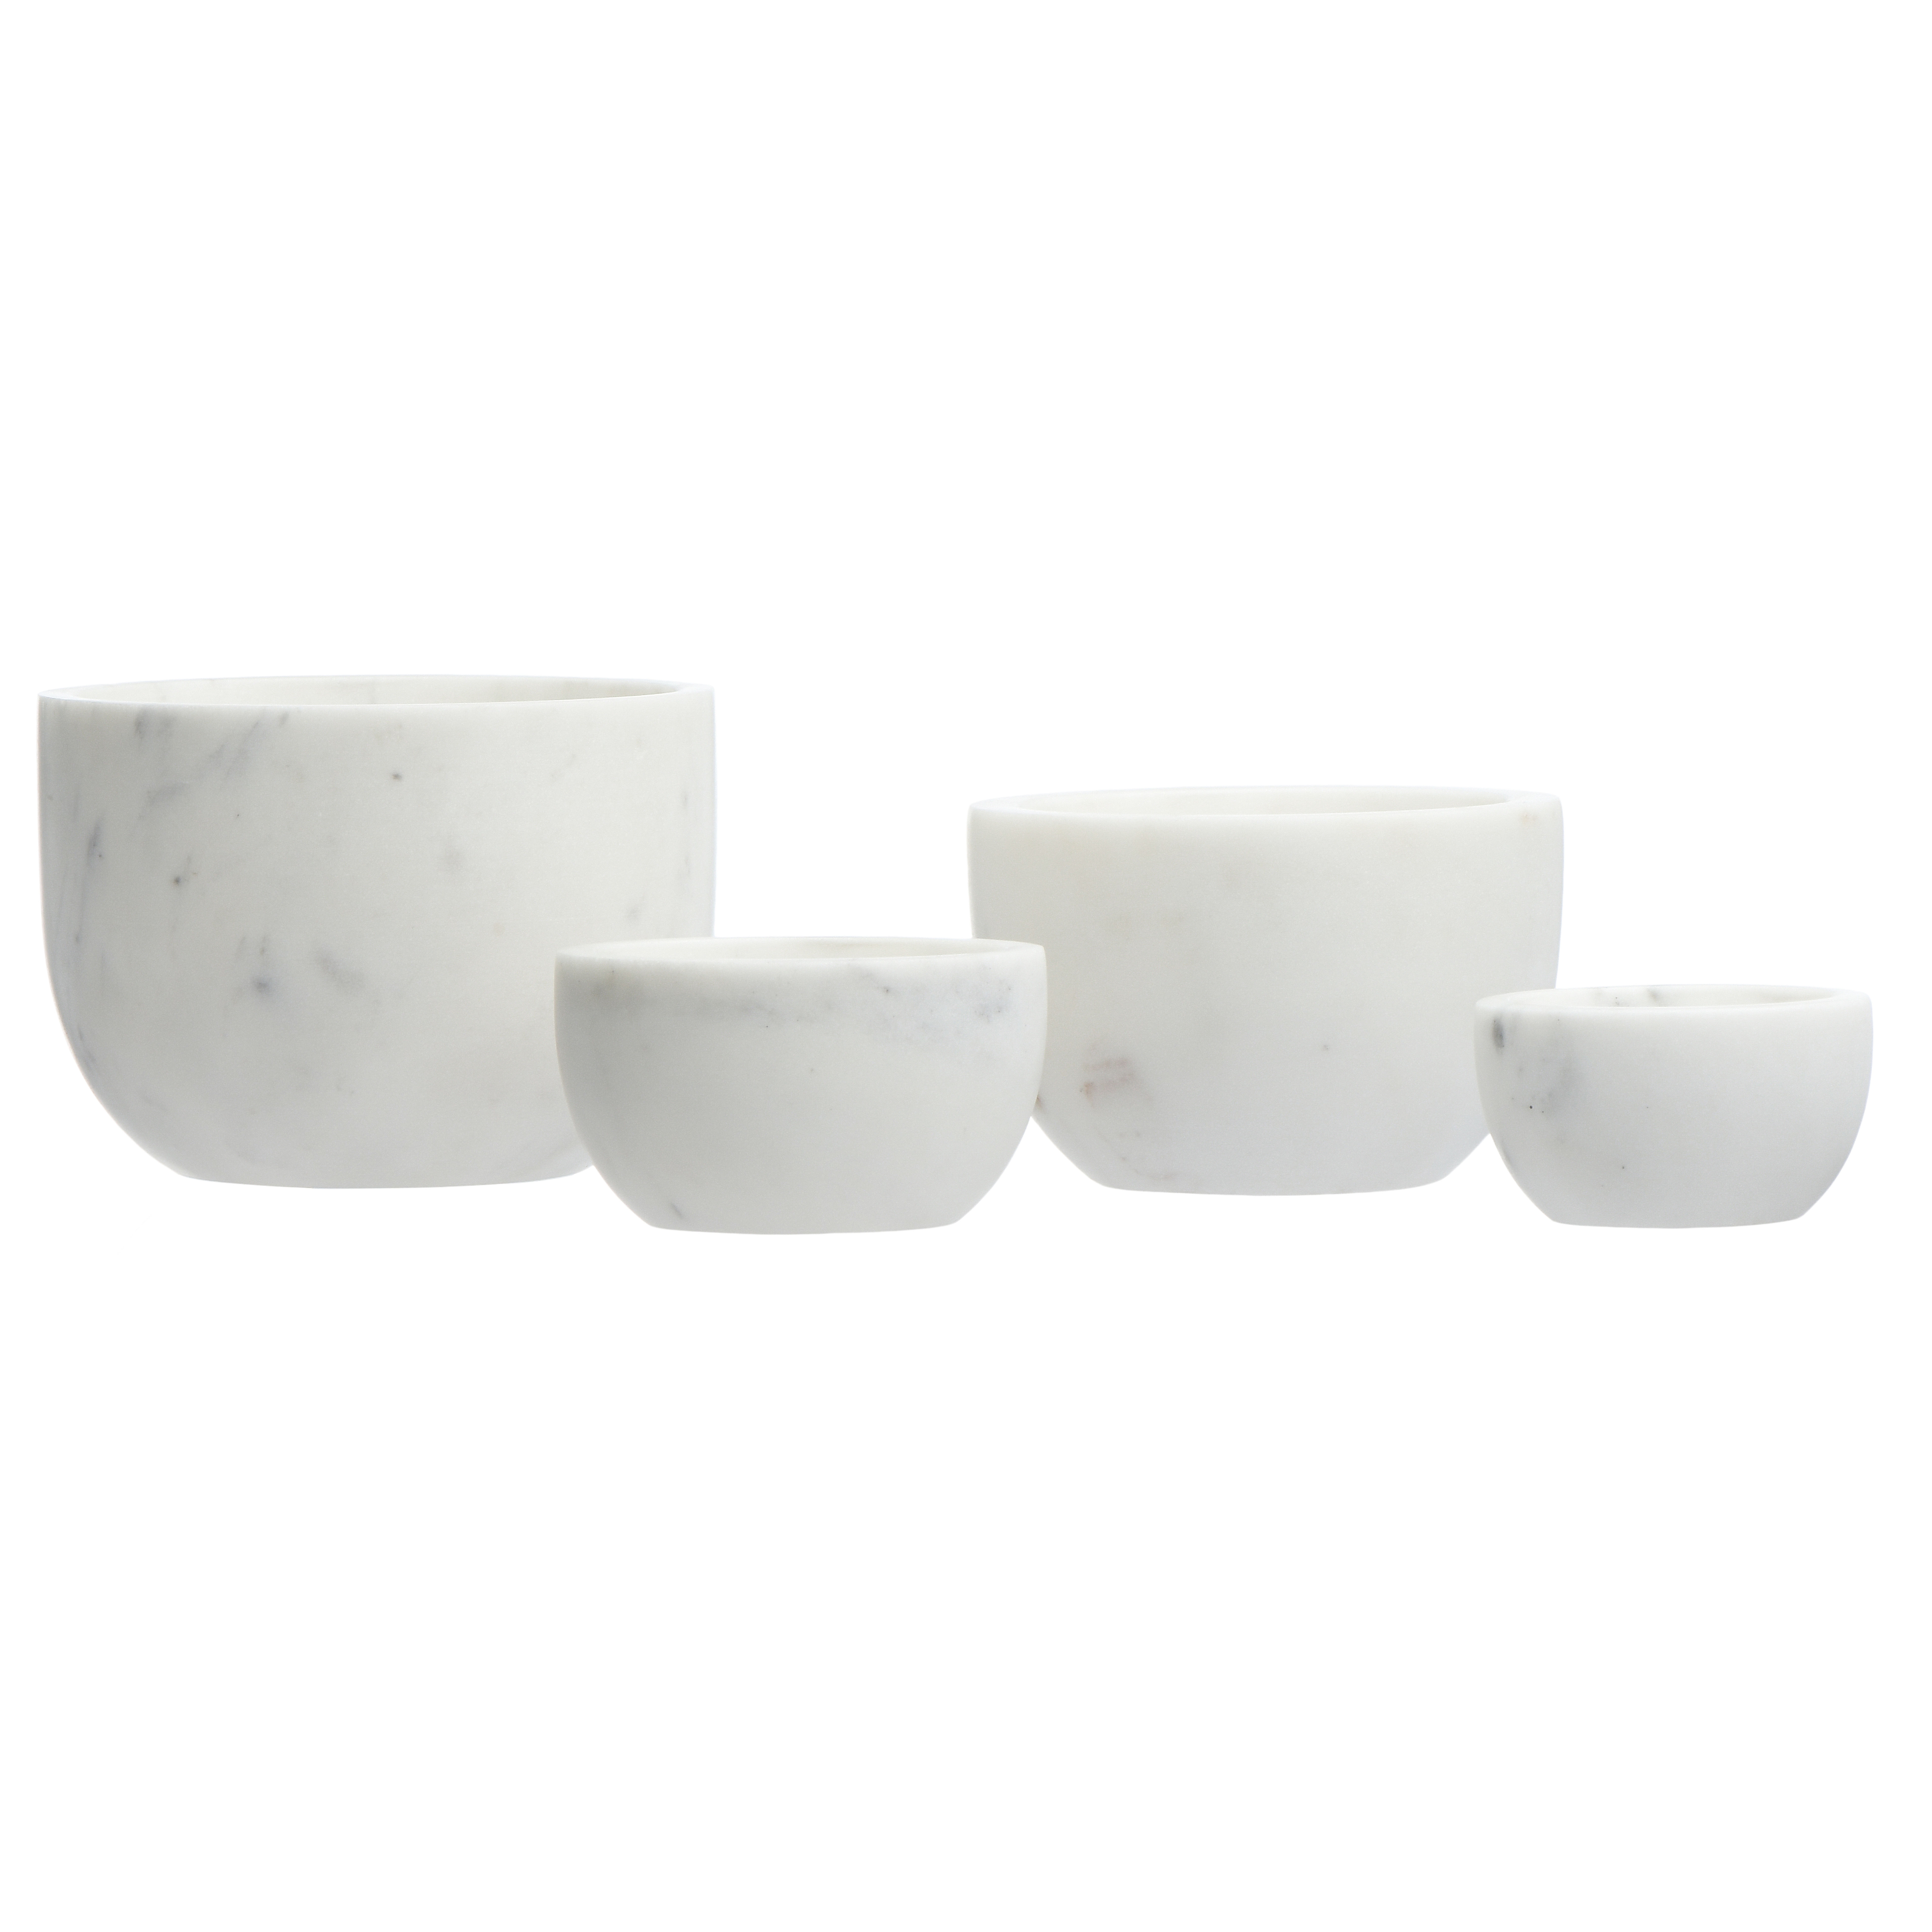 White Marble Bowls (Set of 4) - Image 0